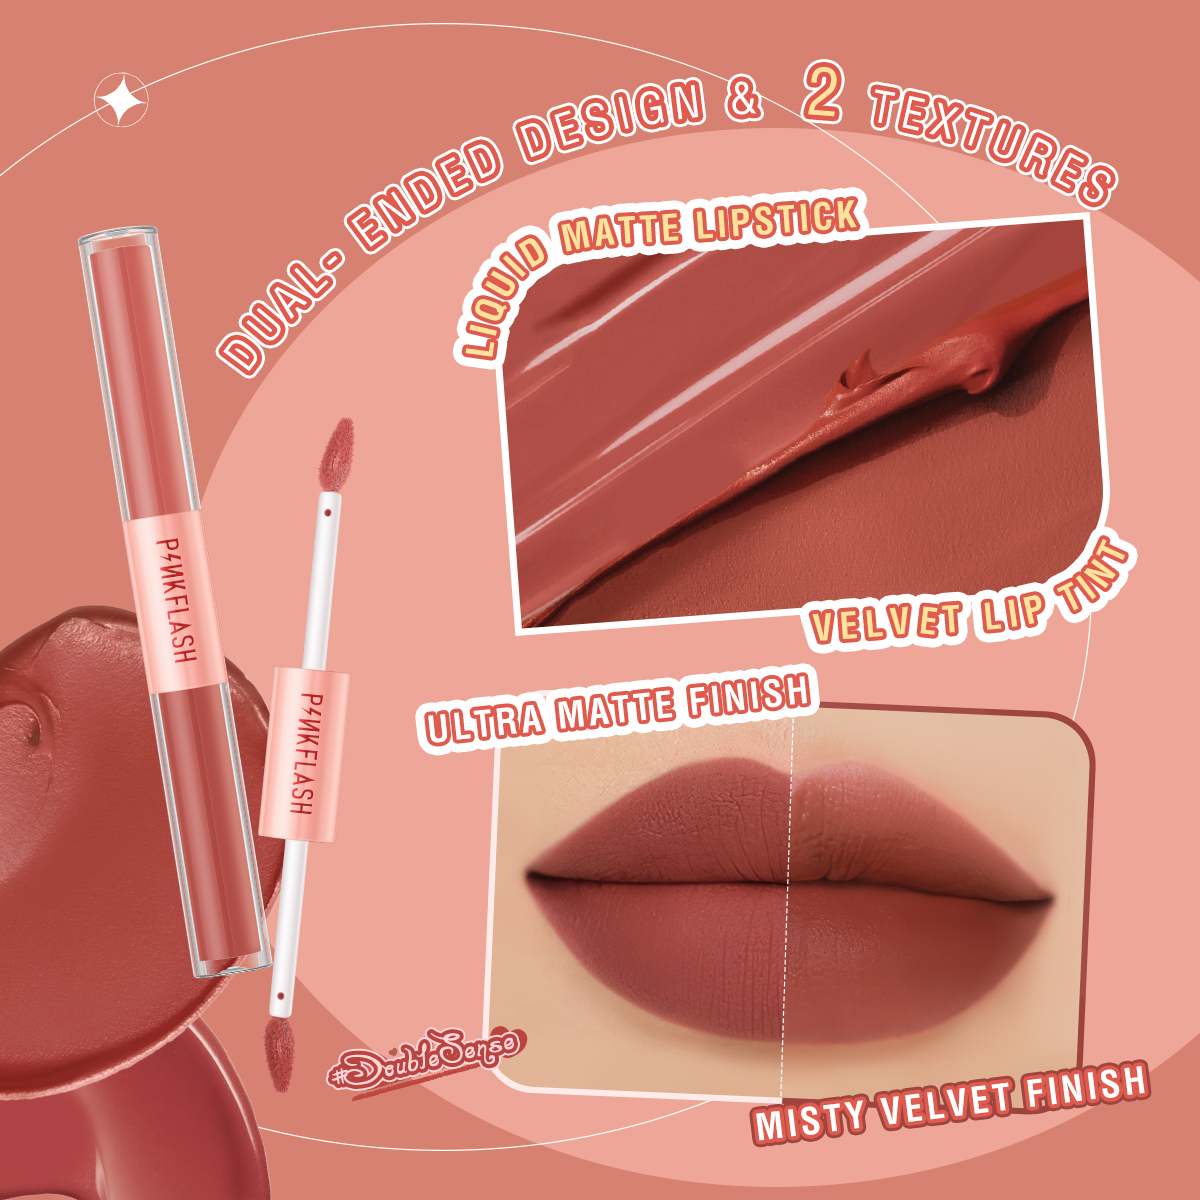 pinkflash duoble lipstick